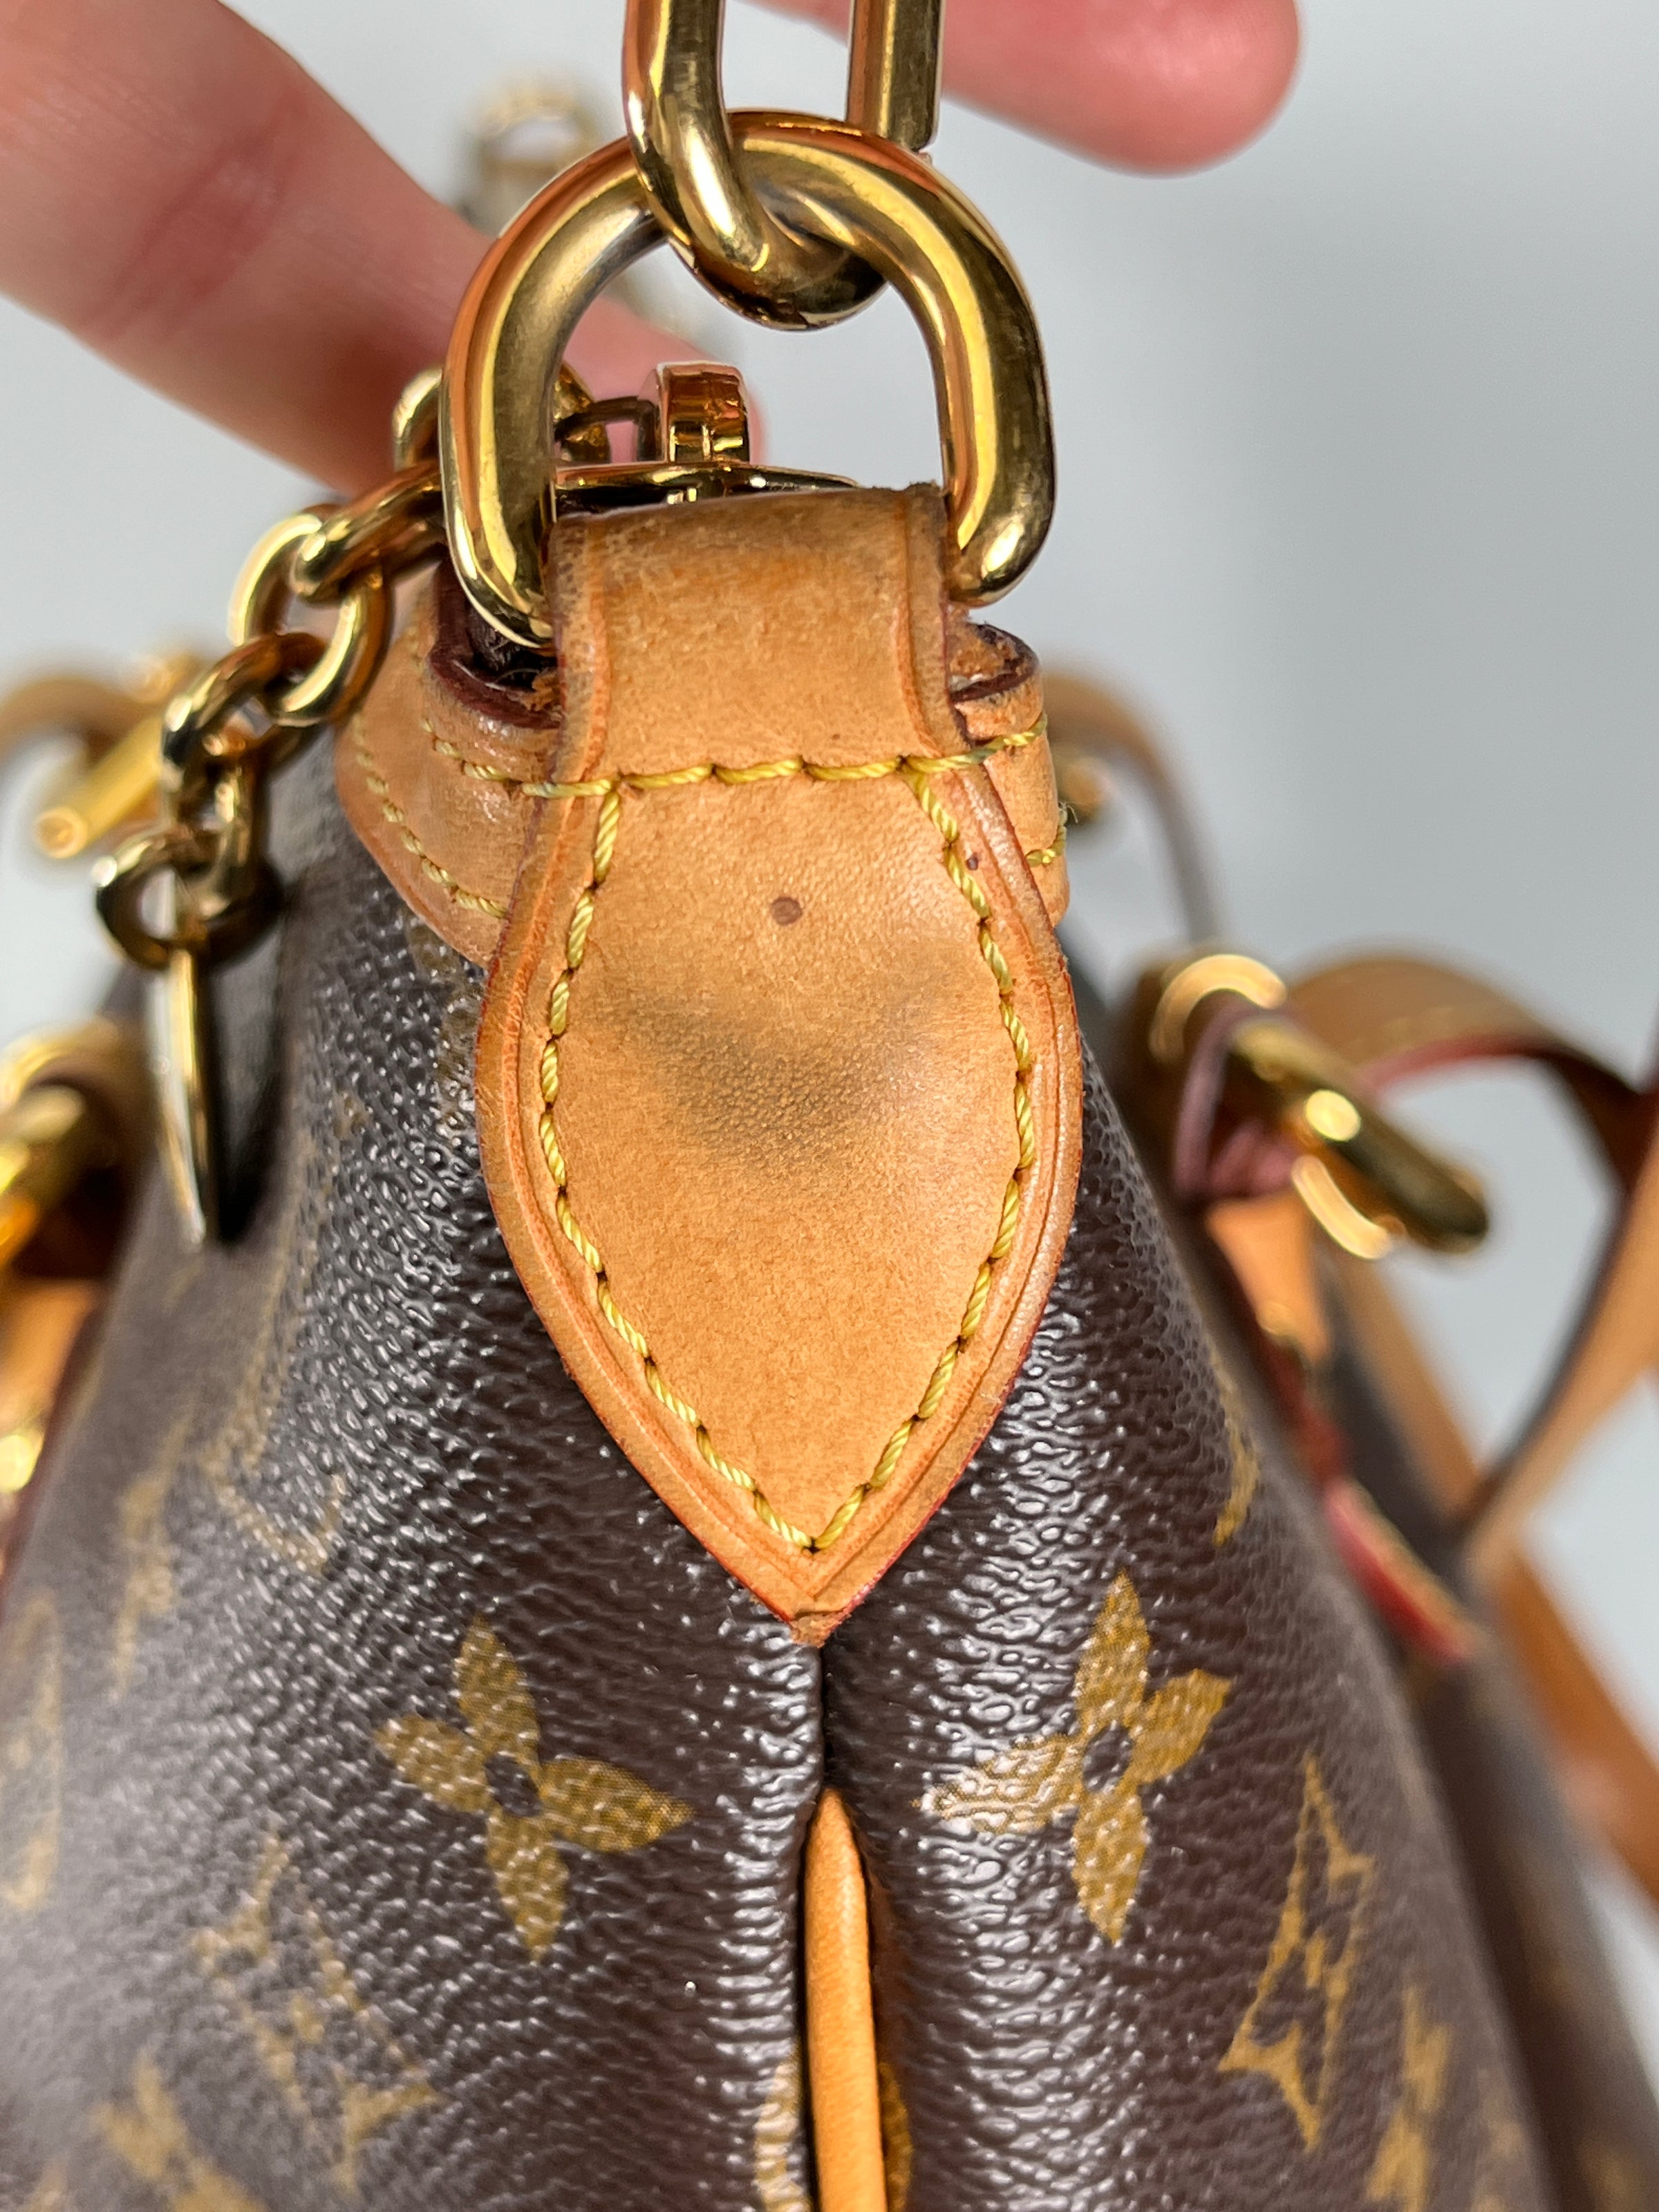 Louis Vuitton Graceful PM (Authentic) - clothing & accessories